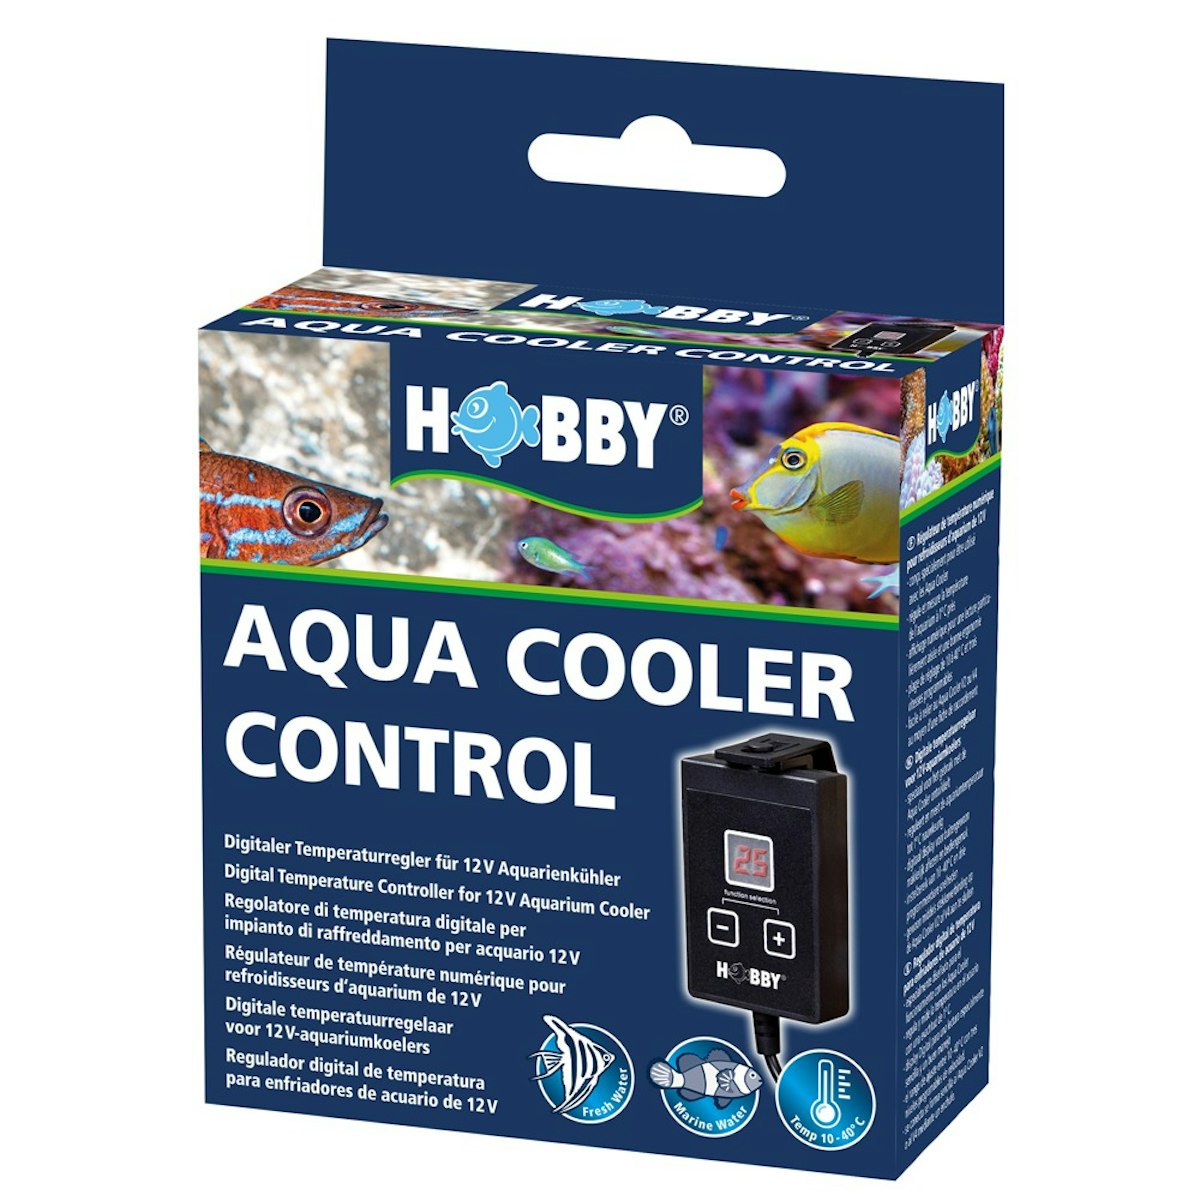 HOBBY Aqua Cooler Control Aquarientechnik von HOBBY